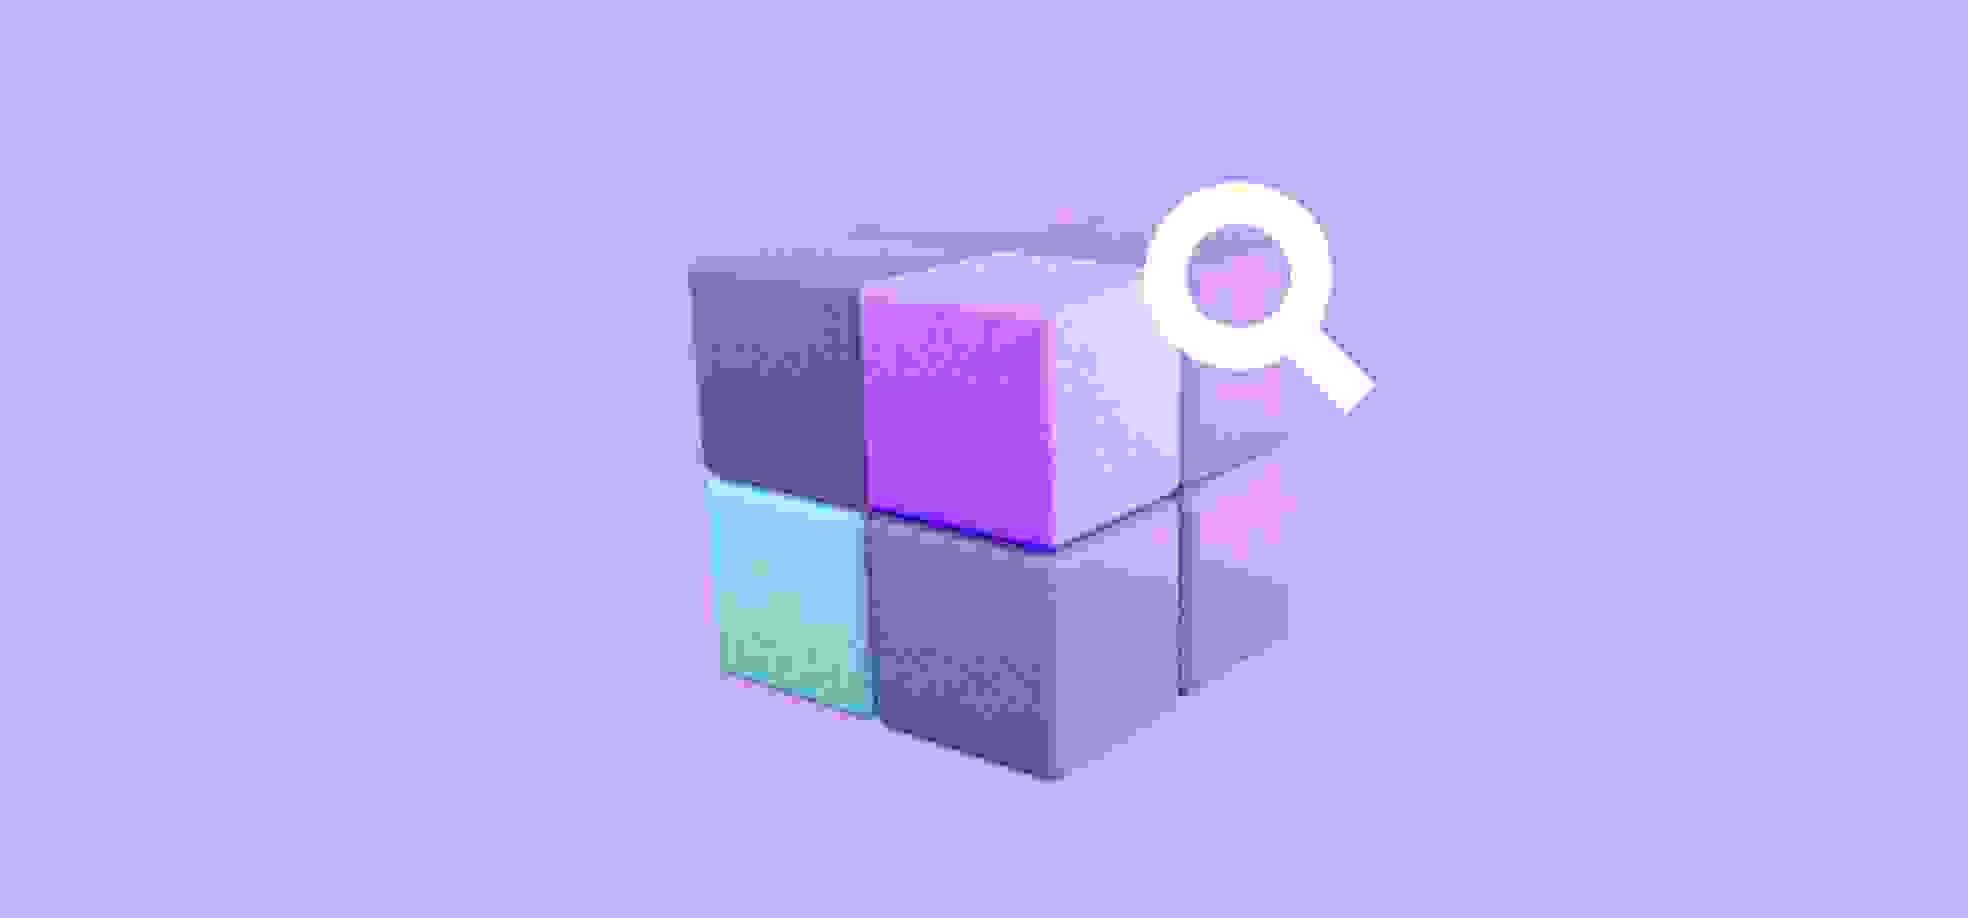 Cube on a purple background illustration